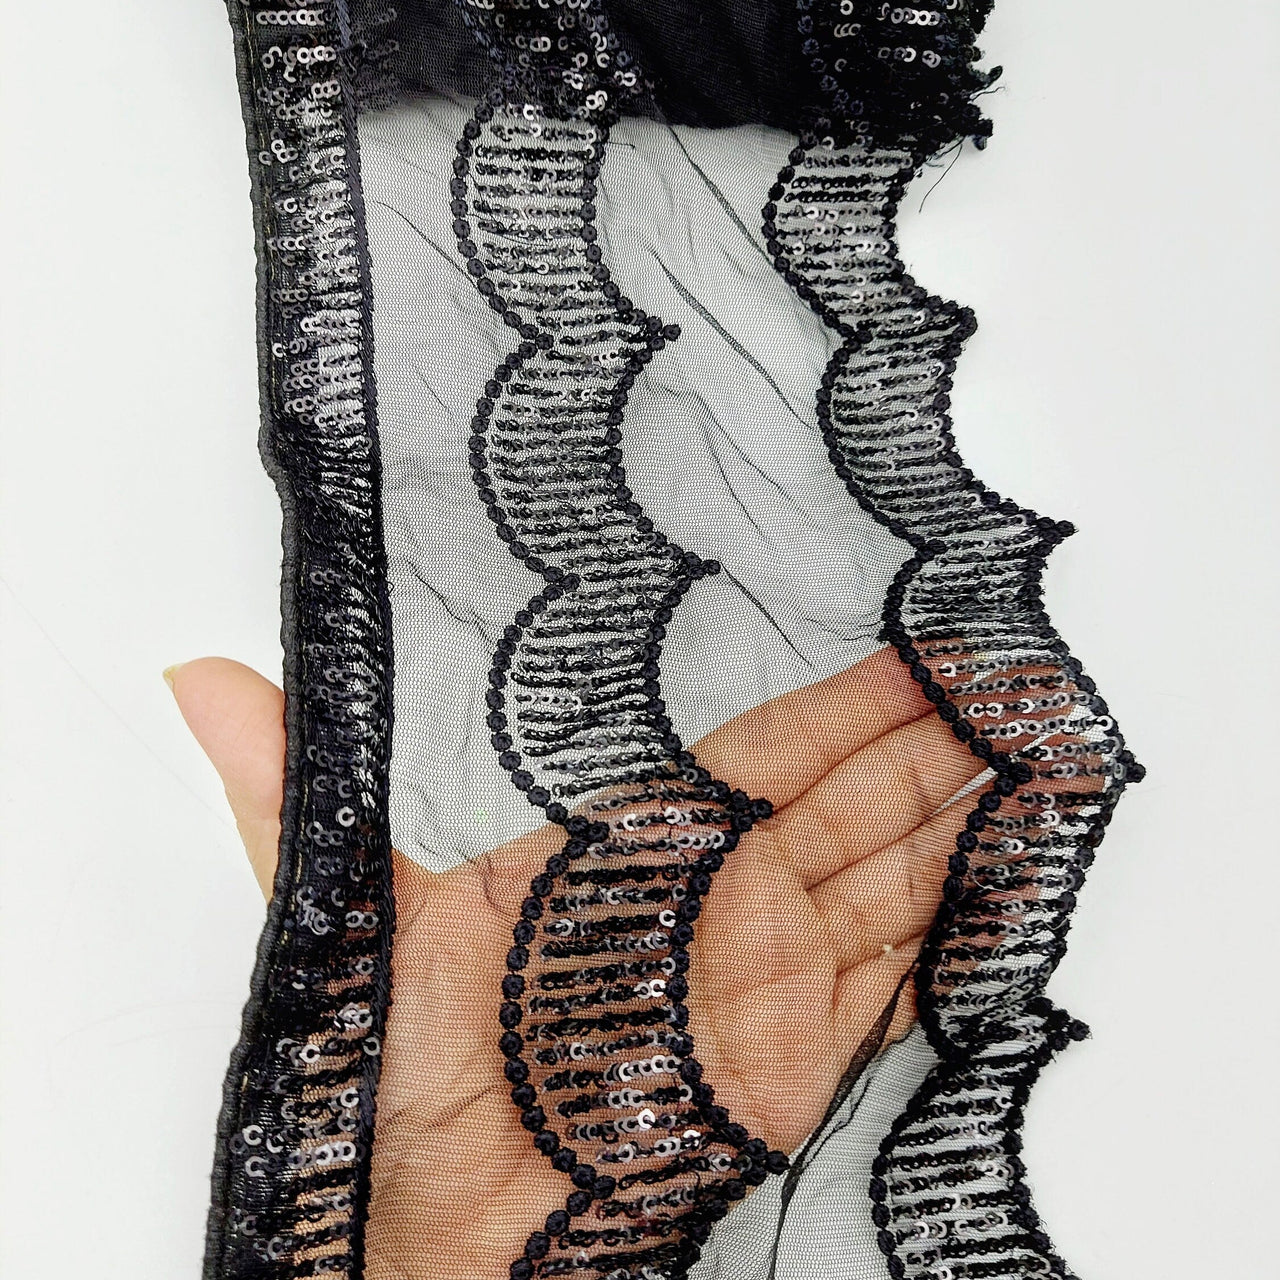 Black Net Scallop Lace Trim with Black Sequins, Sari Border, Embroidered Trim